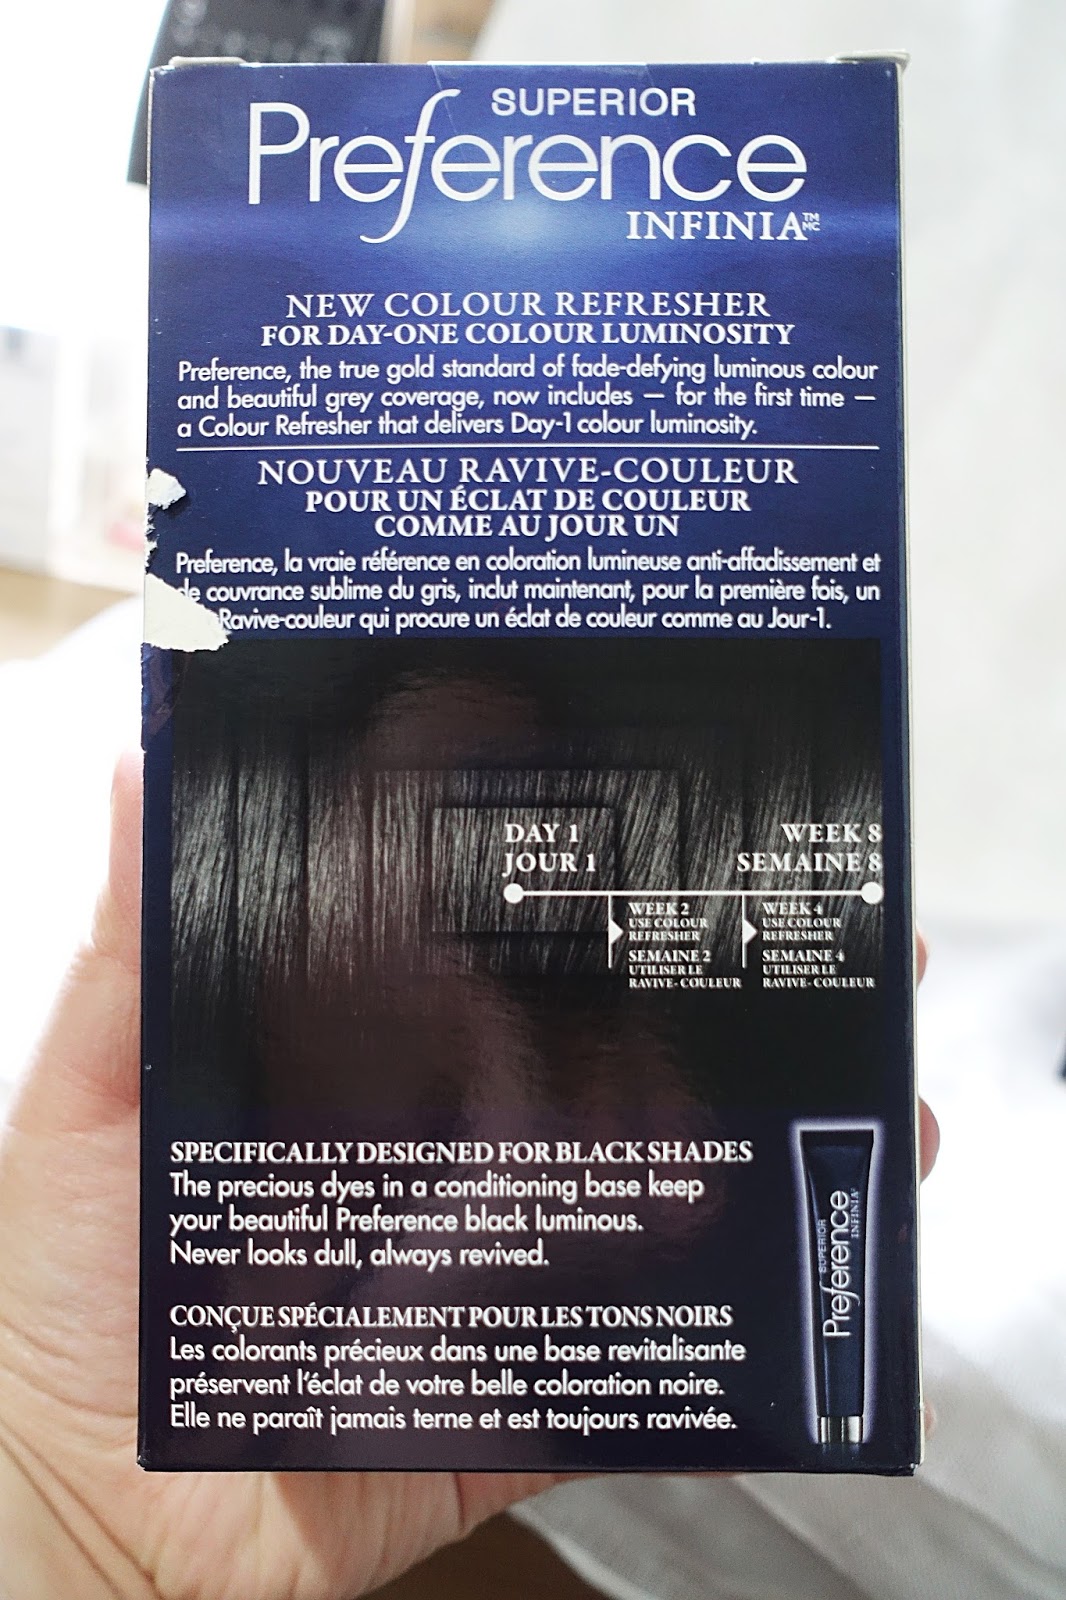 The Blushing Introvert: L'oreal Paris Preference Infinia Hair Dye